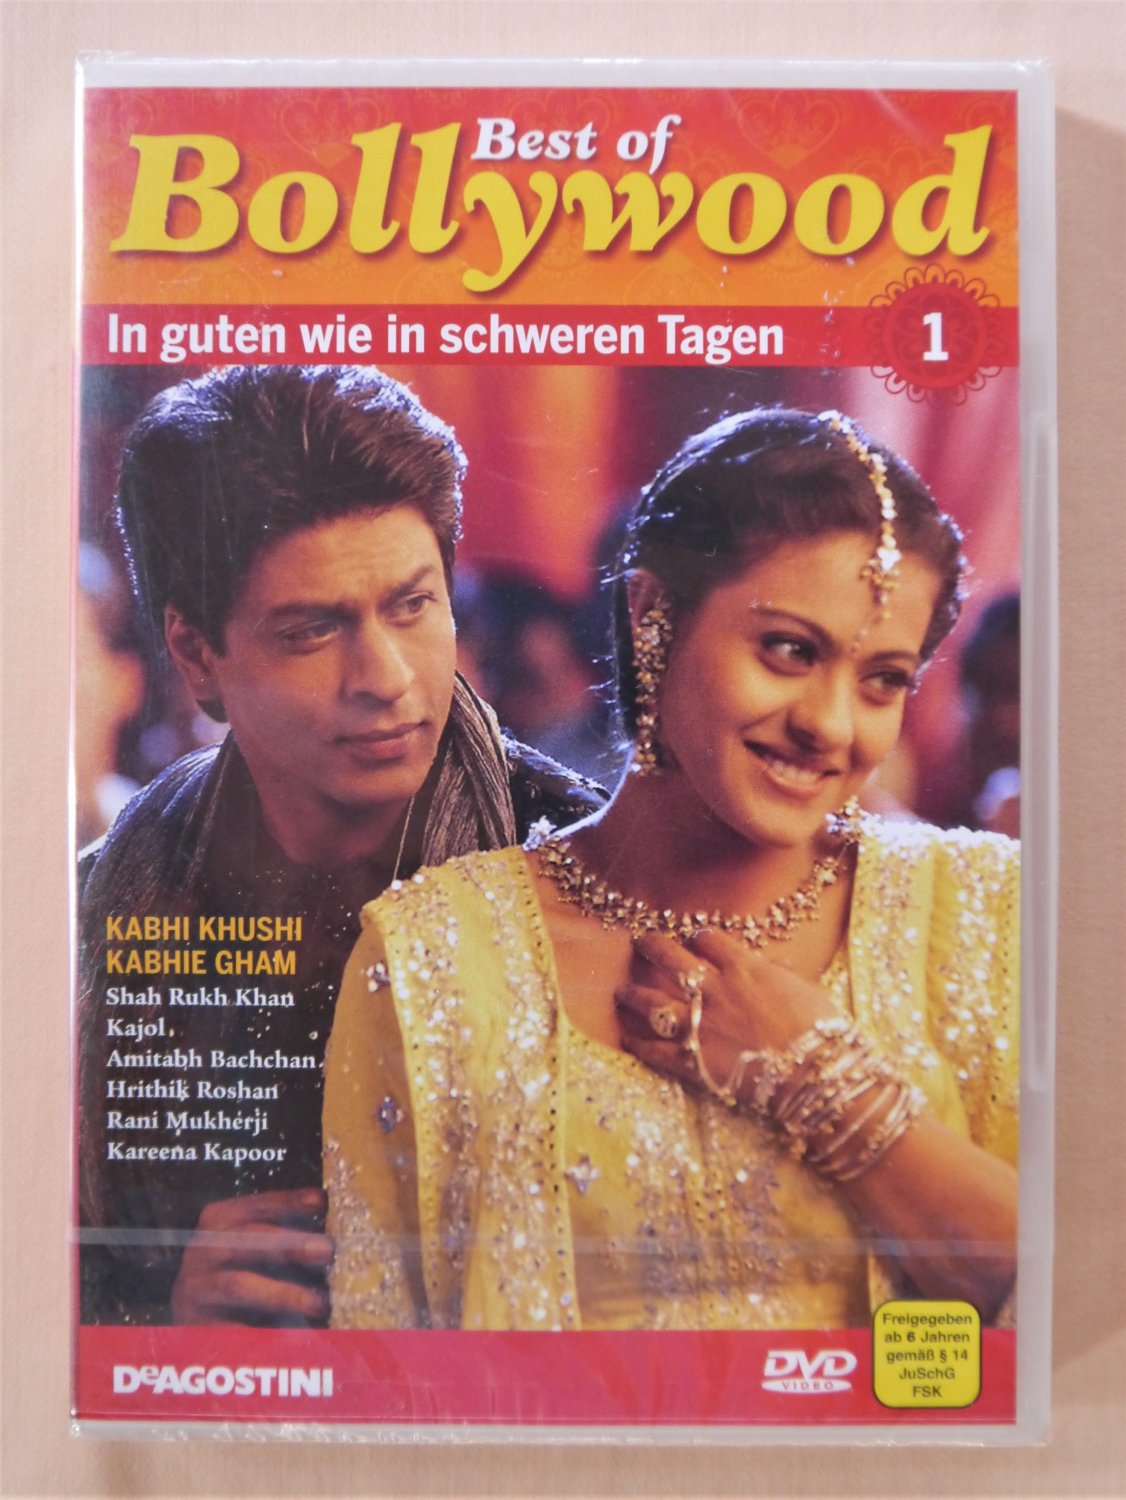 https://images.booklooker.de/x/02Tse2/Karan-Johar+In-guten-wie-in-schweren-Tagen-Best-of-Bollywood.jpg